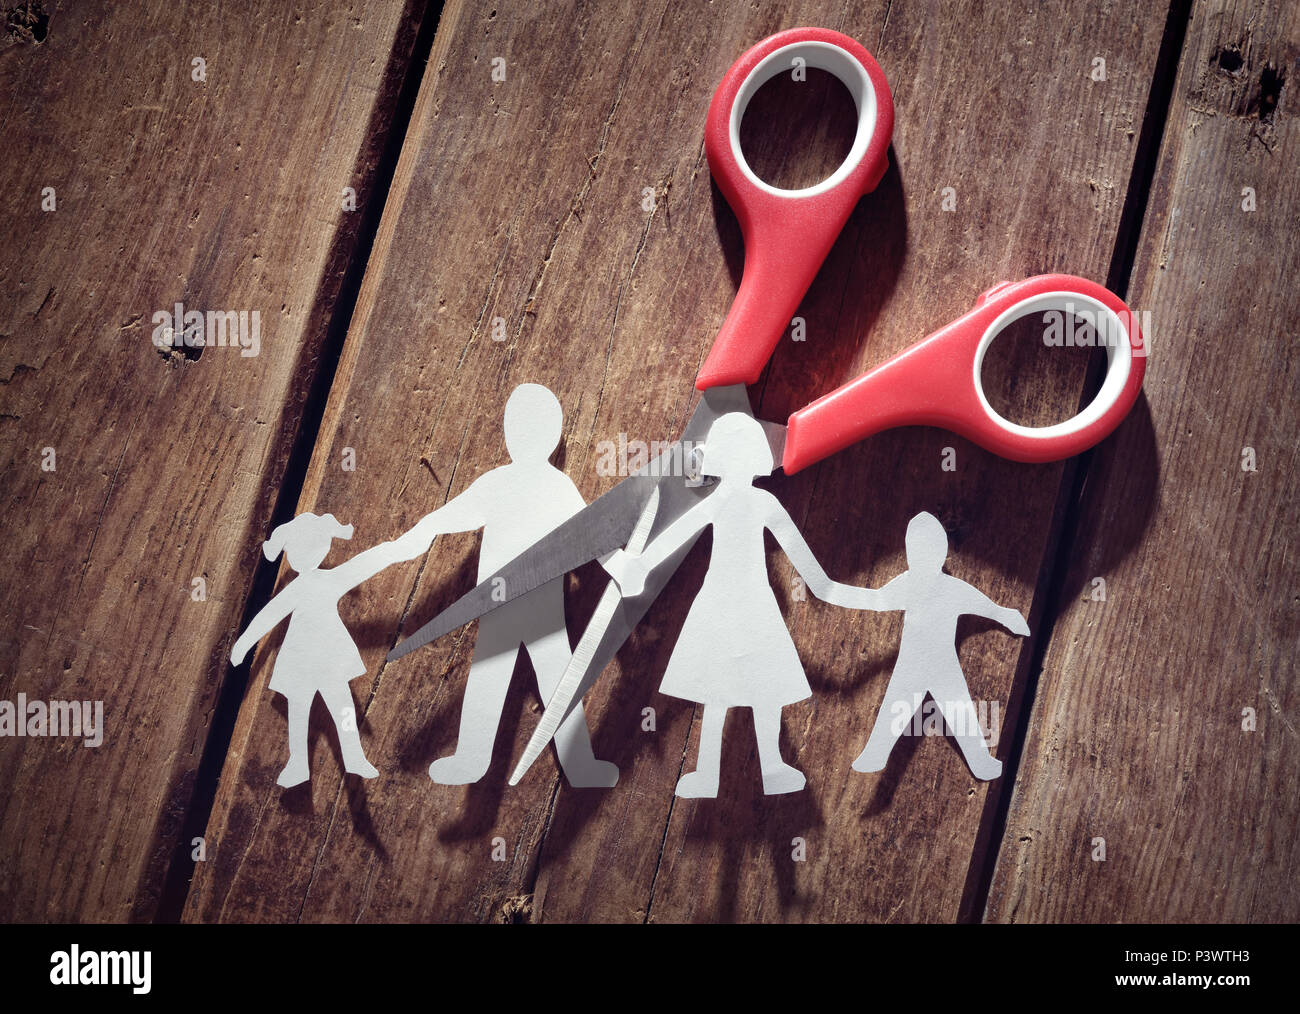 Divorce and child custody scissors cutting family apart Stock Photo